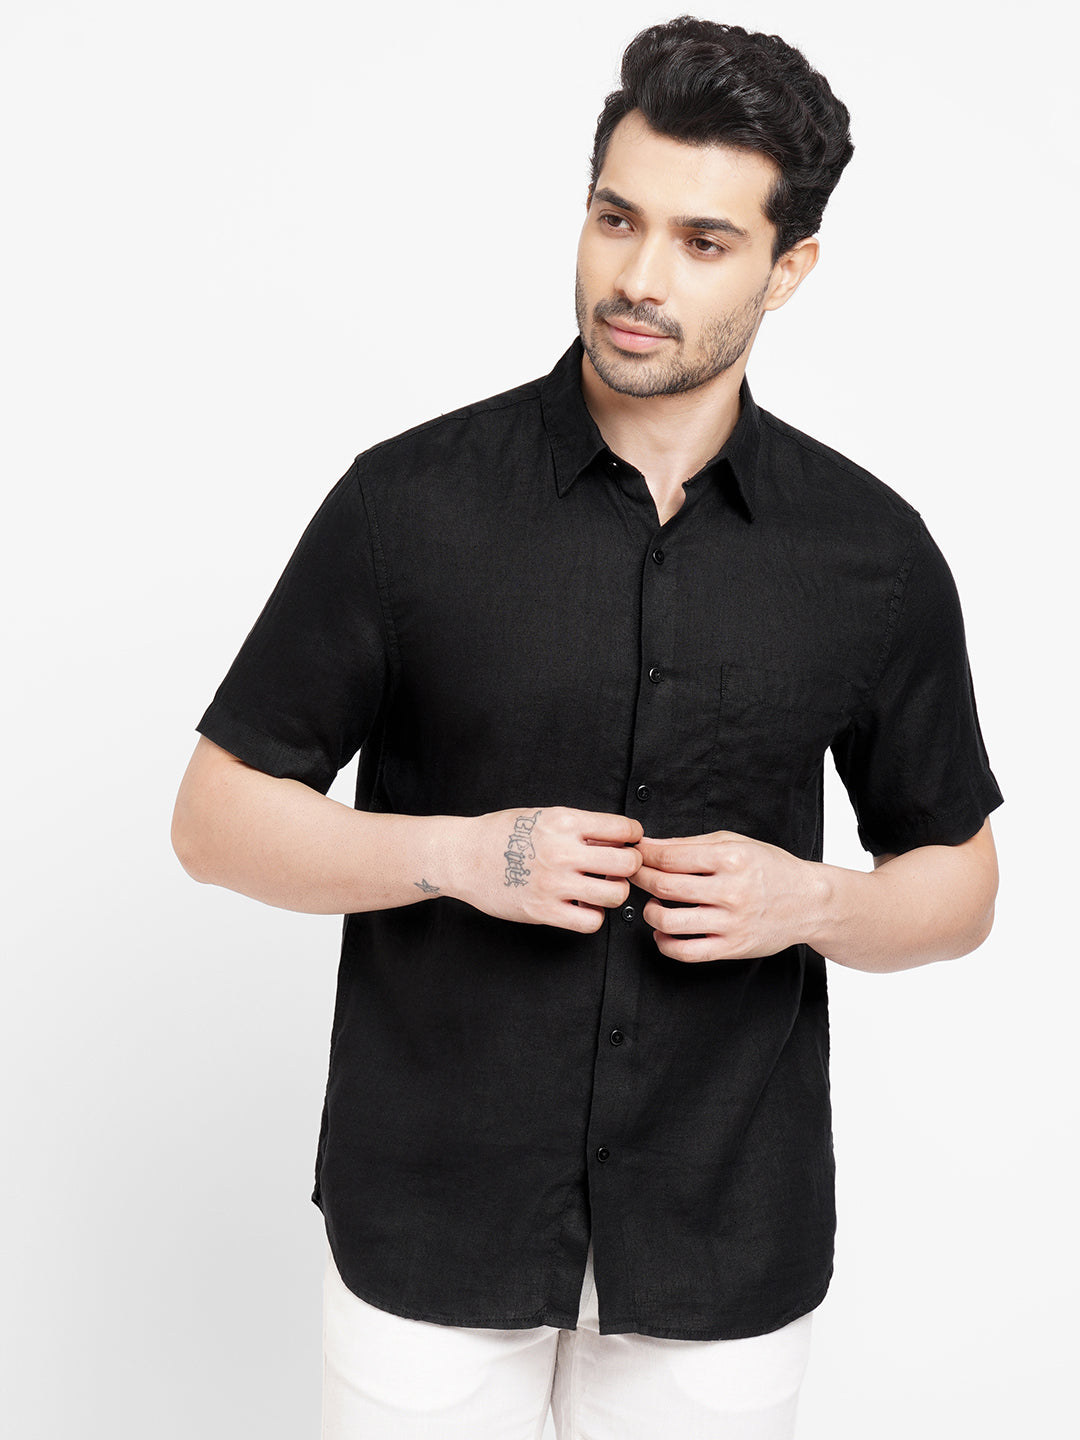 Men's Black 100% Linen Regular Fit Short Sleeved Shirt